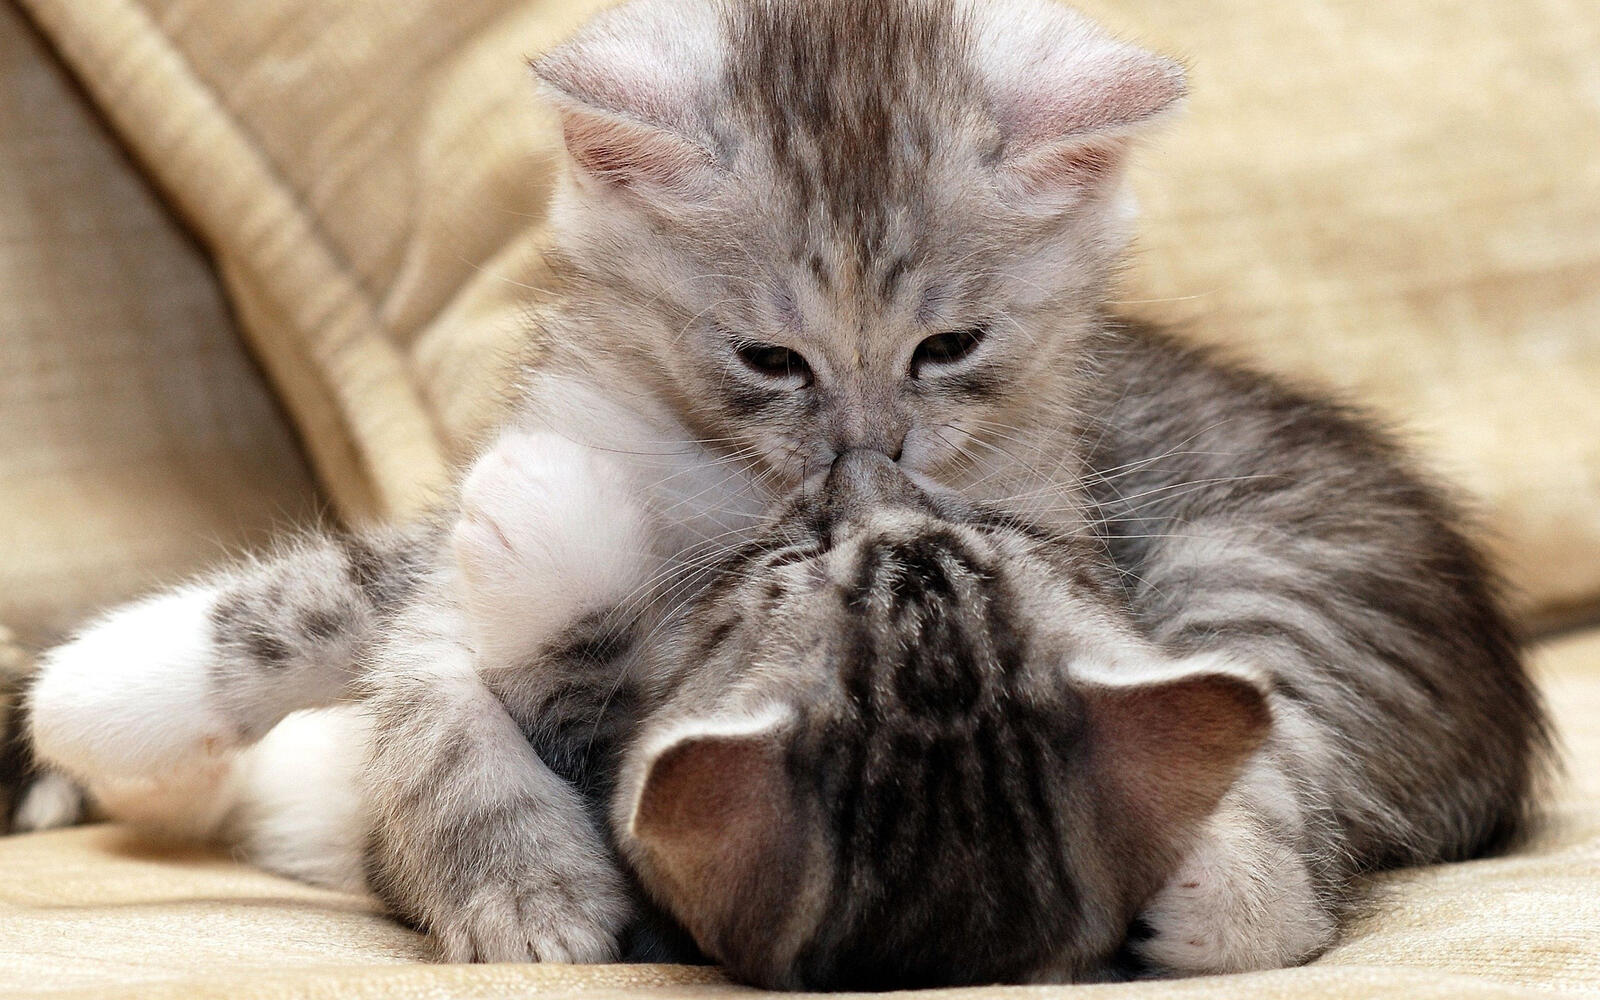 Wallpapers sofa kittens hugs on the desktop